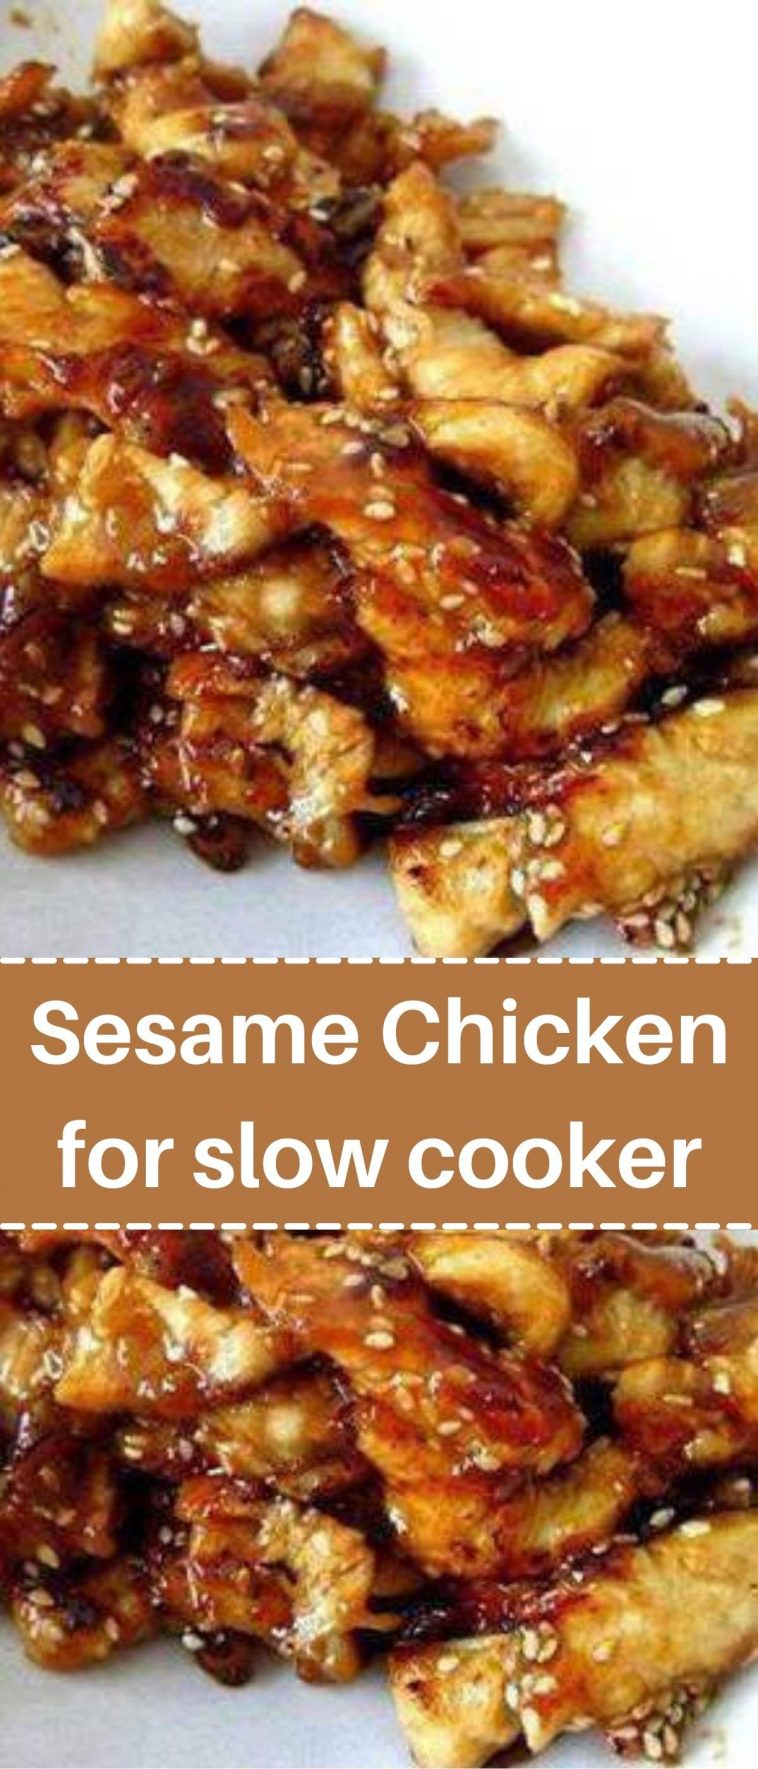 Sesame Chicken for slow cooker